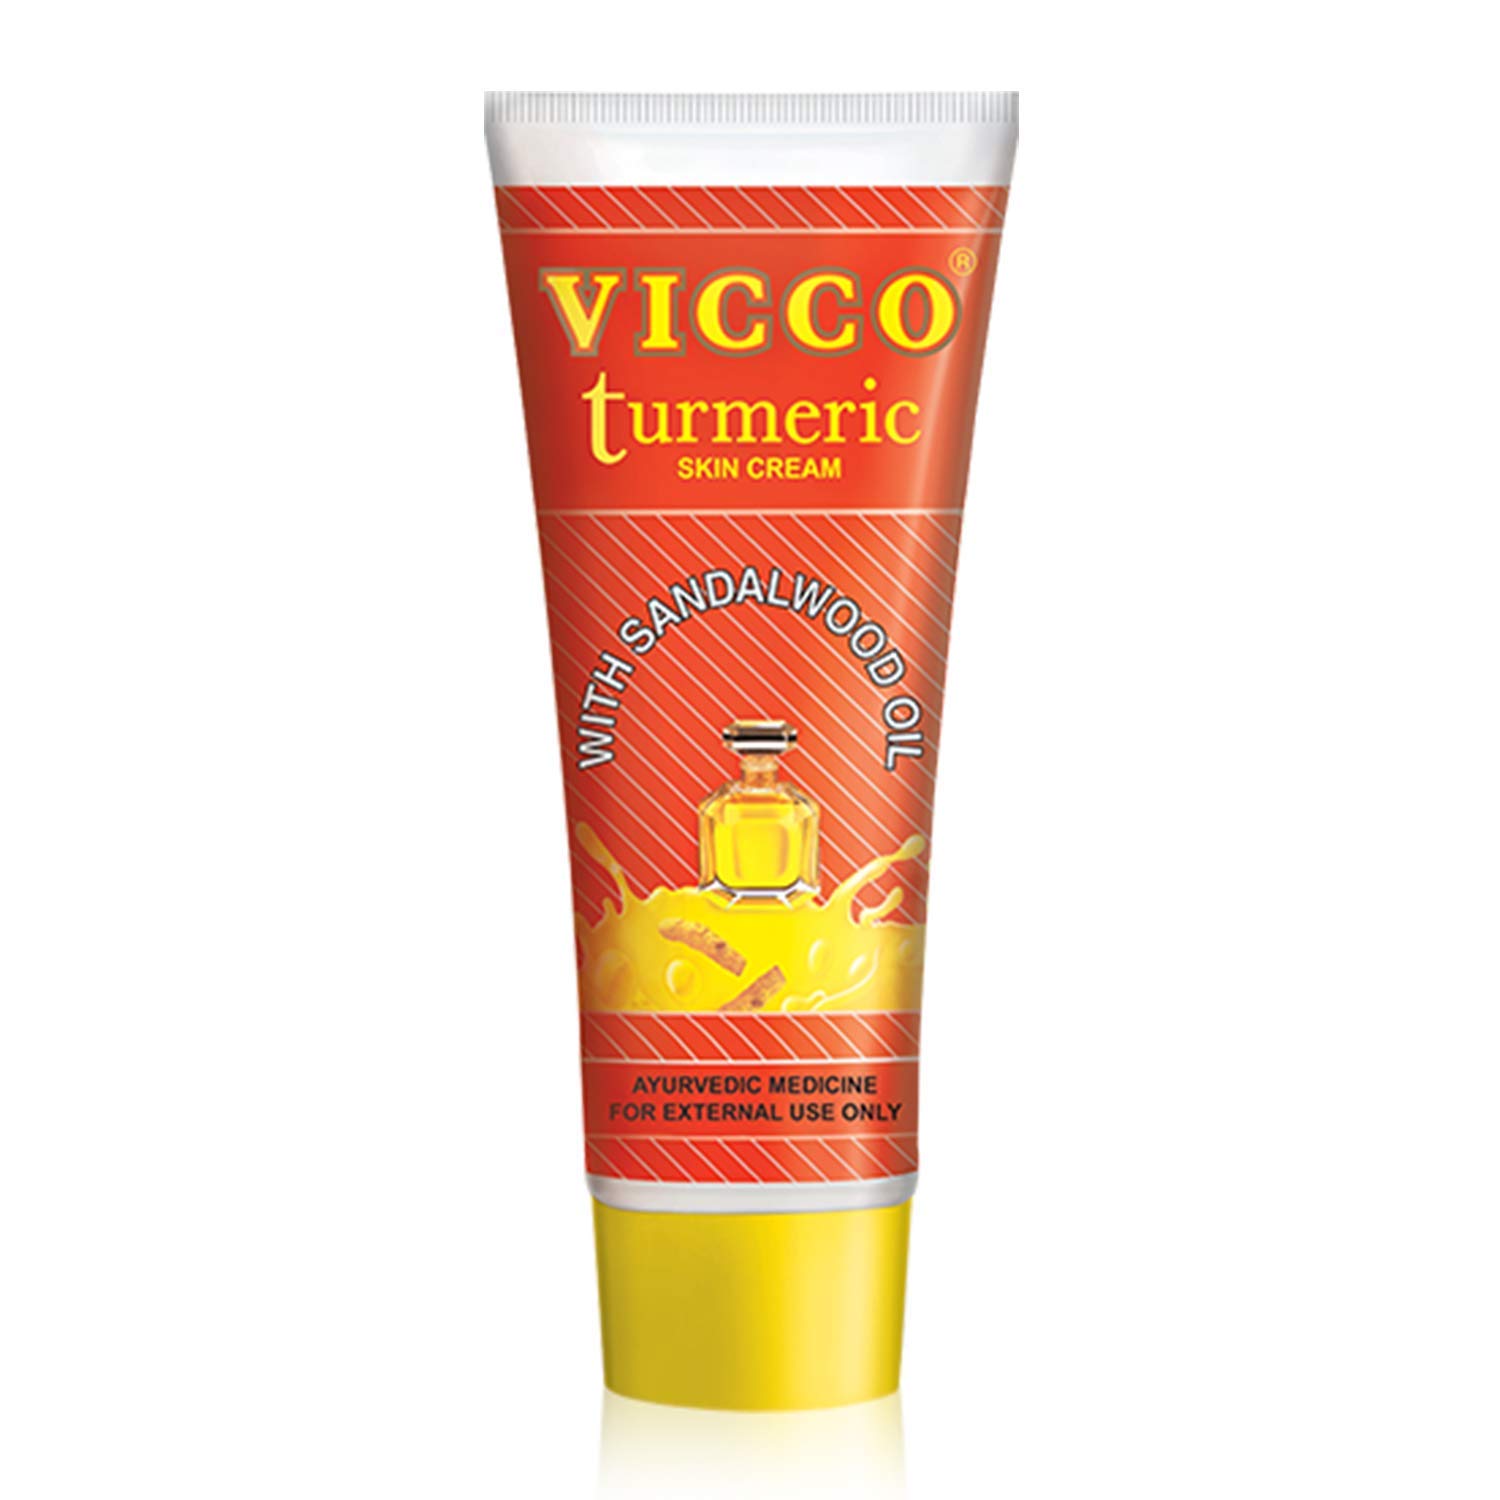 Buy Vicco Turmeric Skin Cream